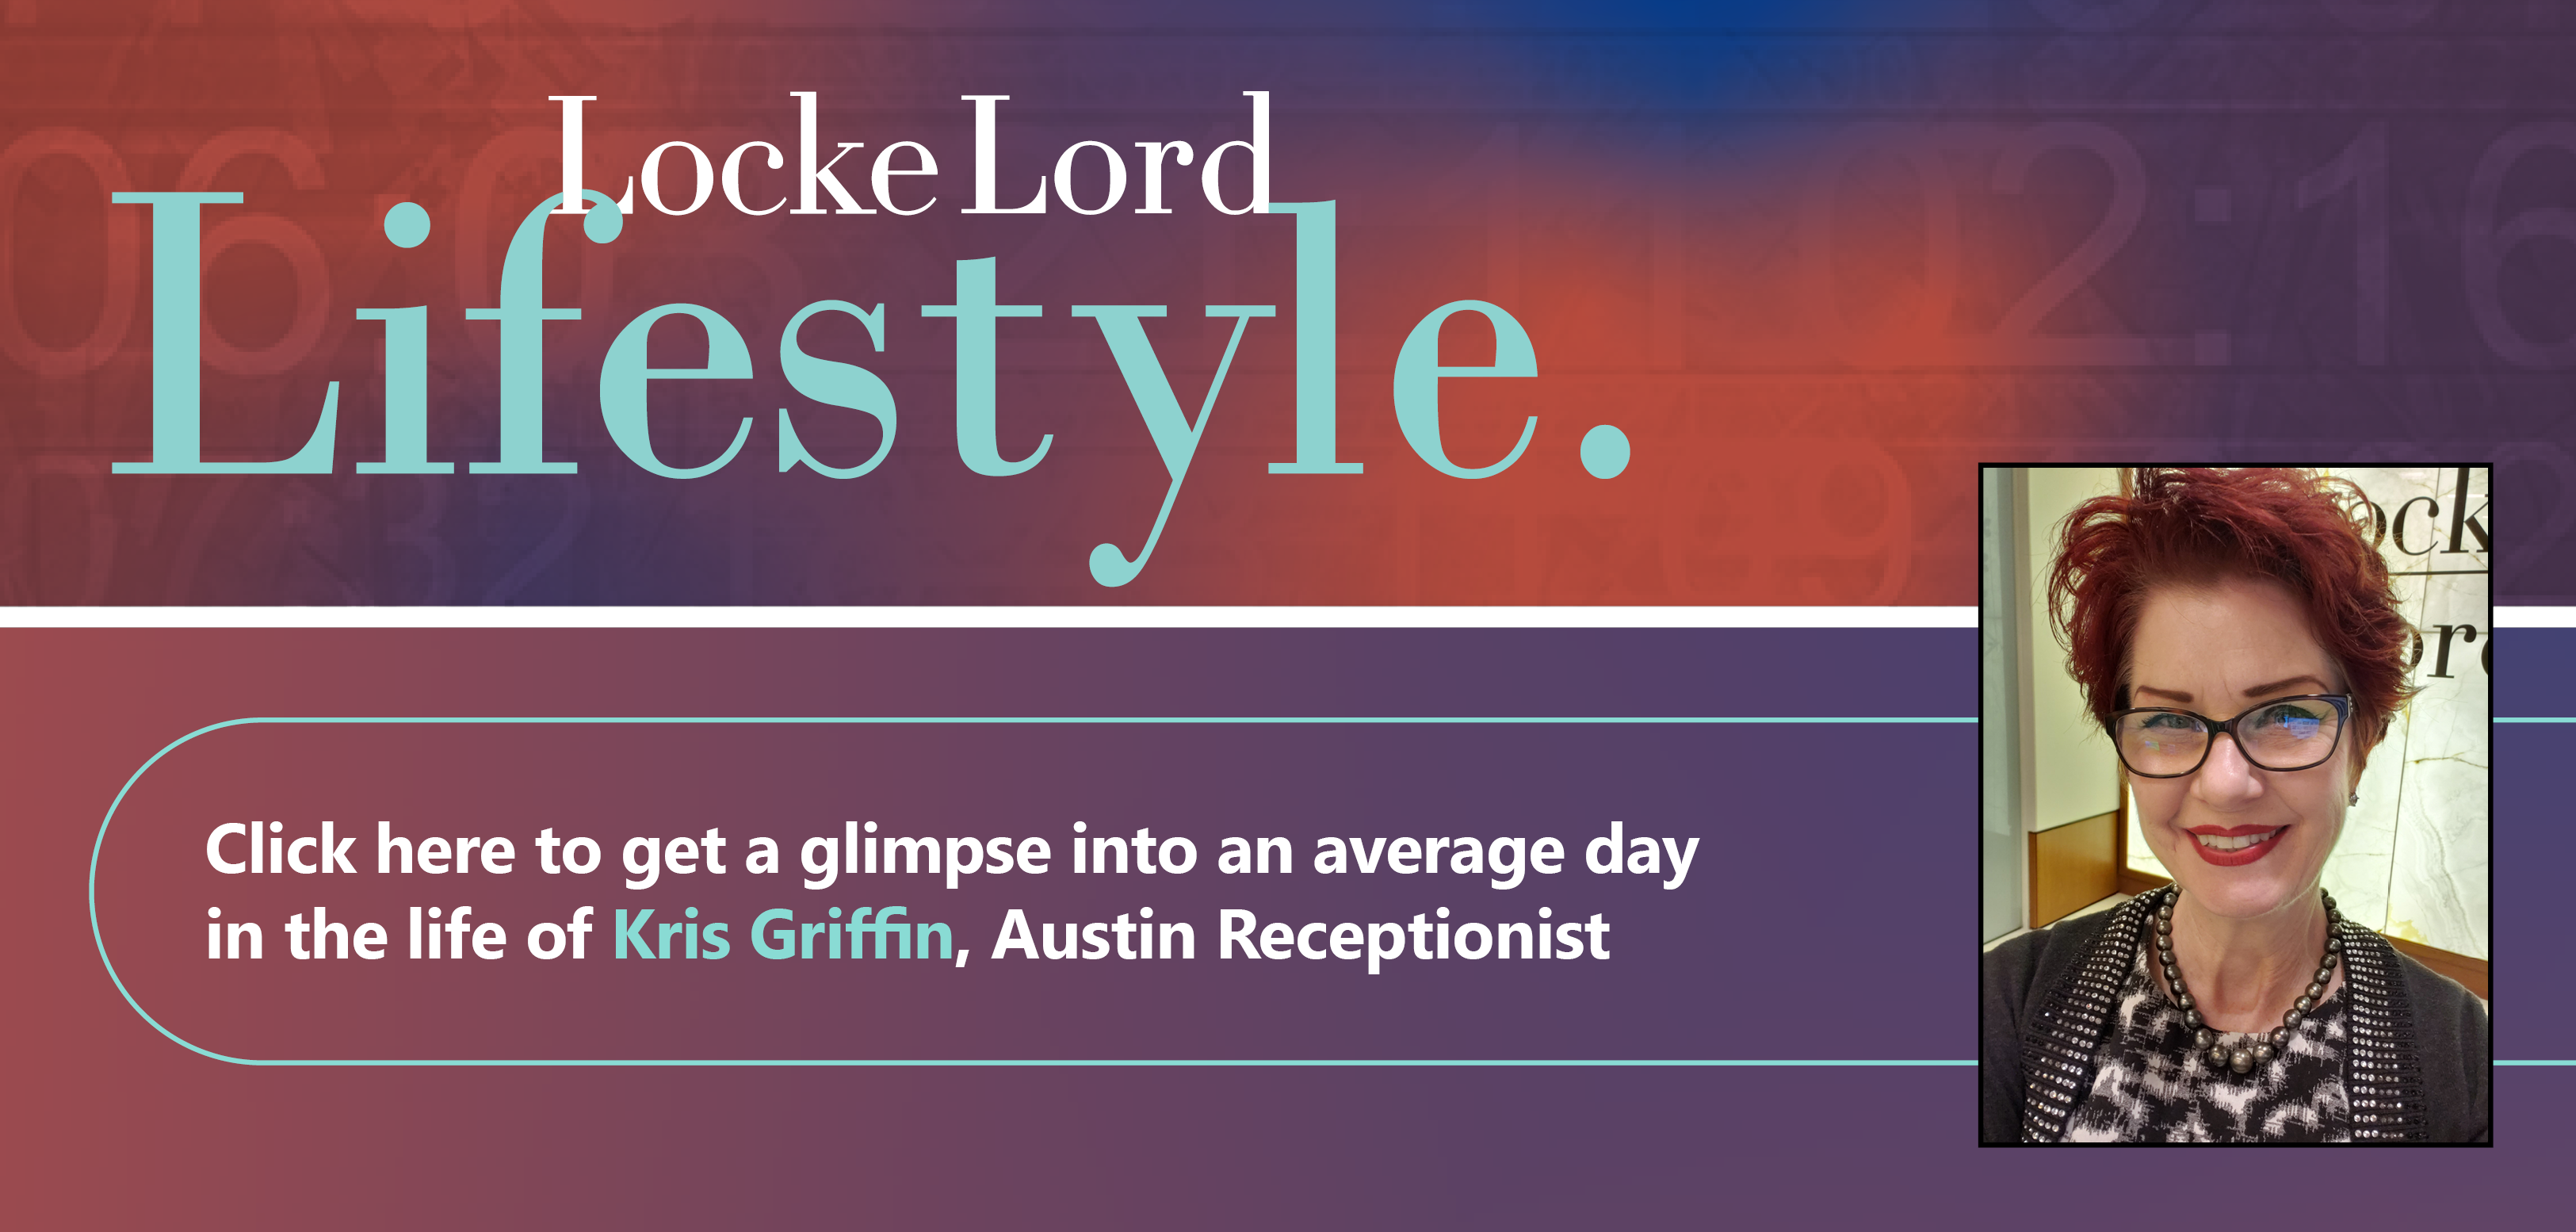 Locke Lord Lifestyle - Kris Griffin